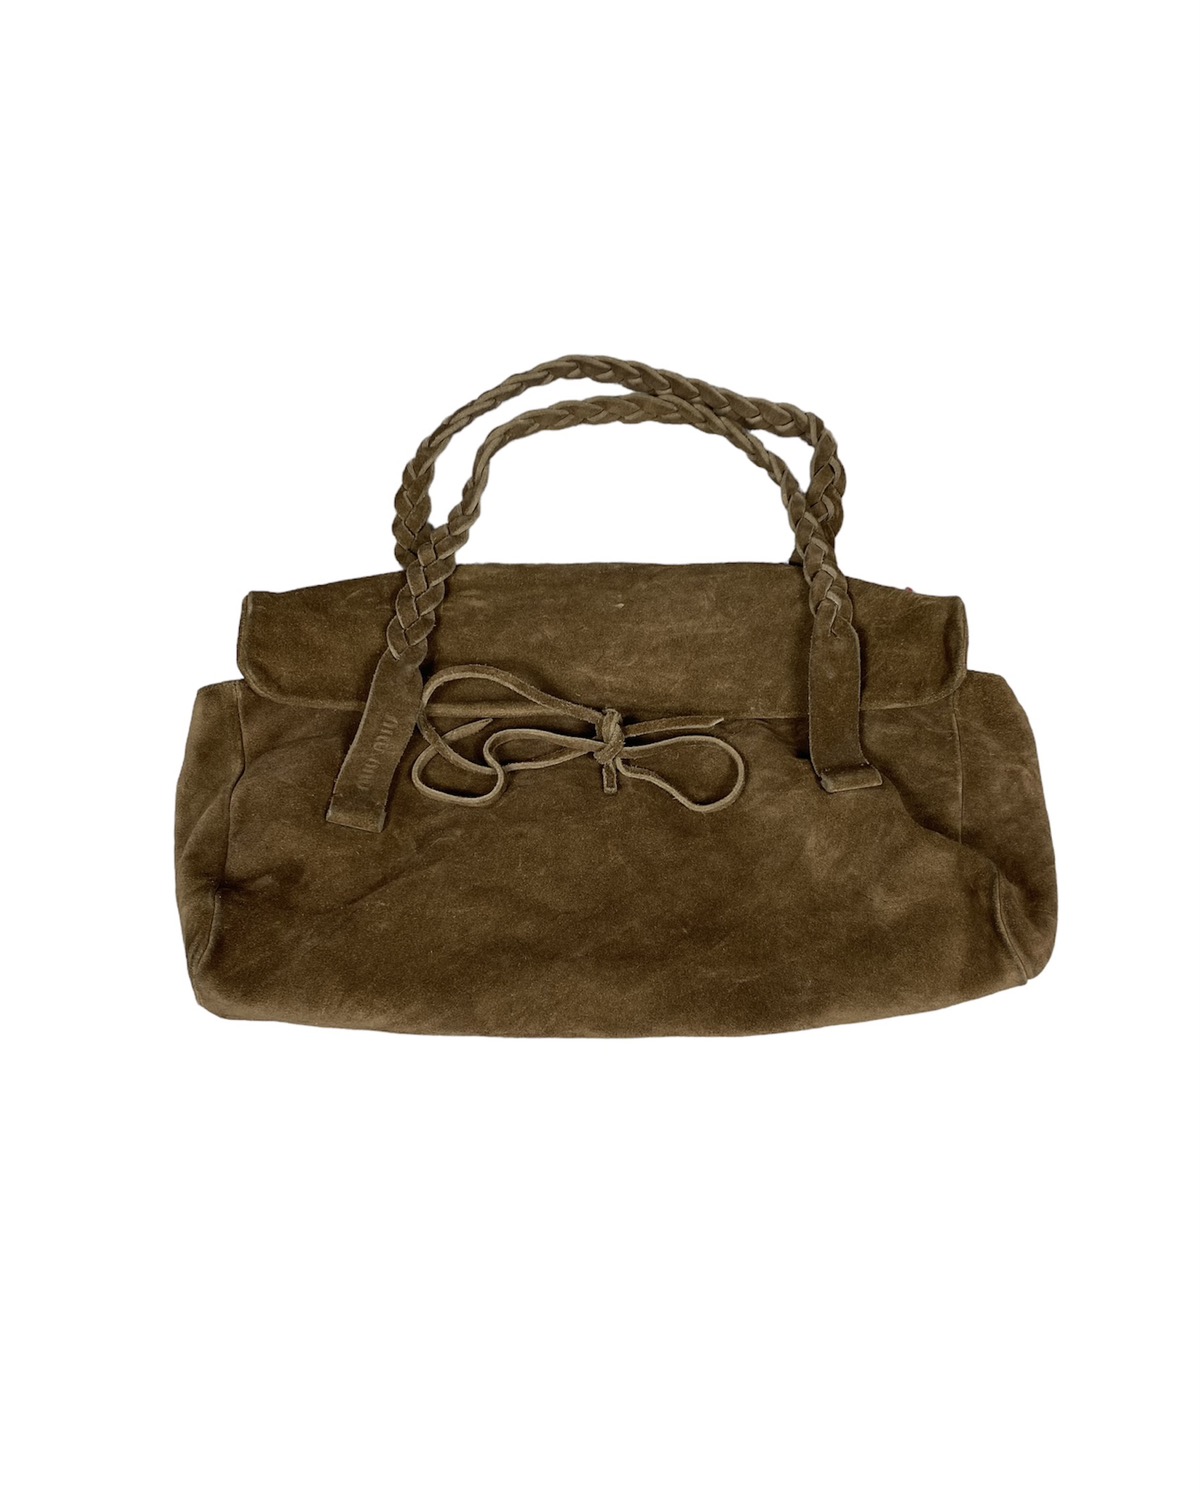 Miu Miu Suede Leather Bag - 1